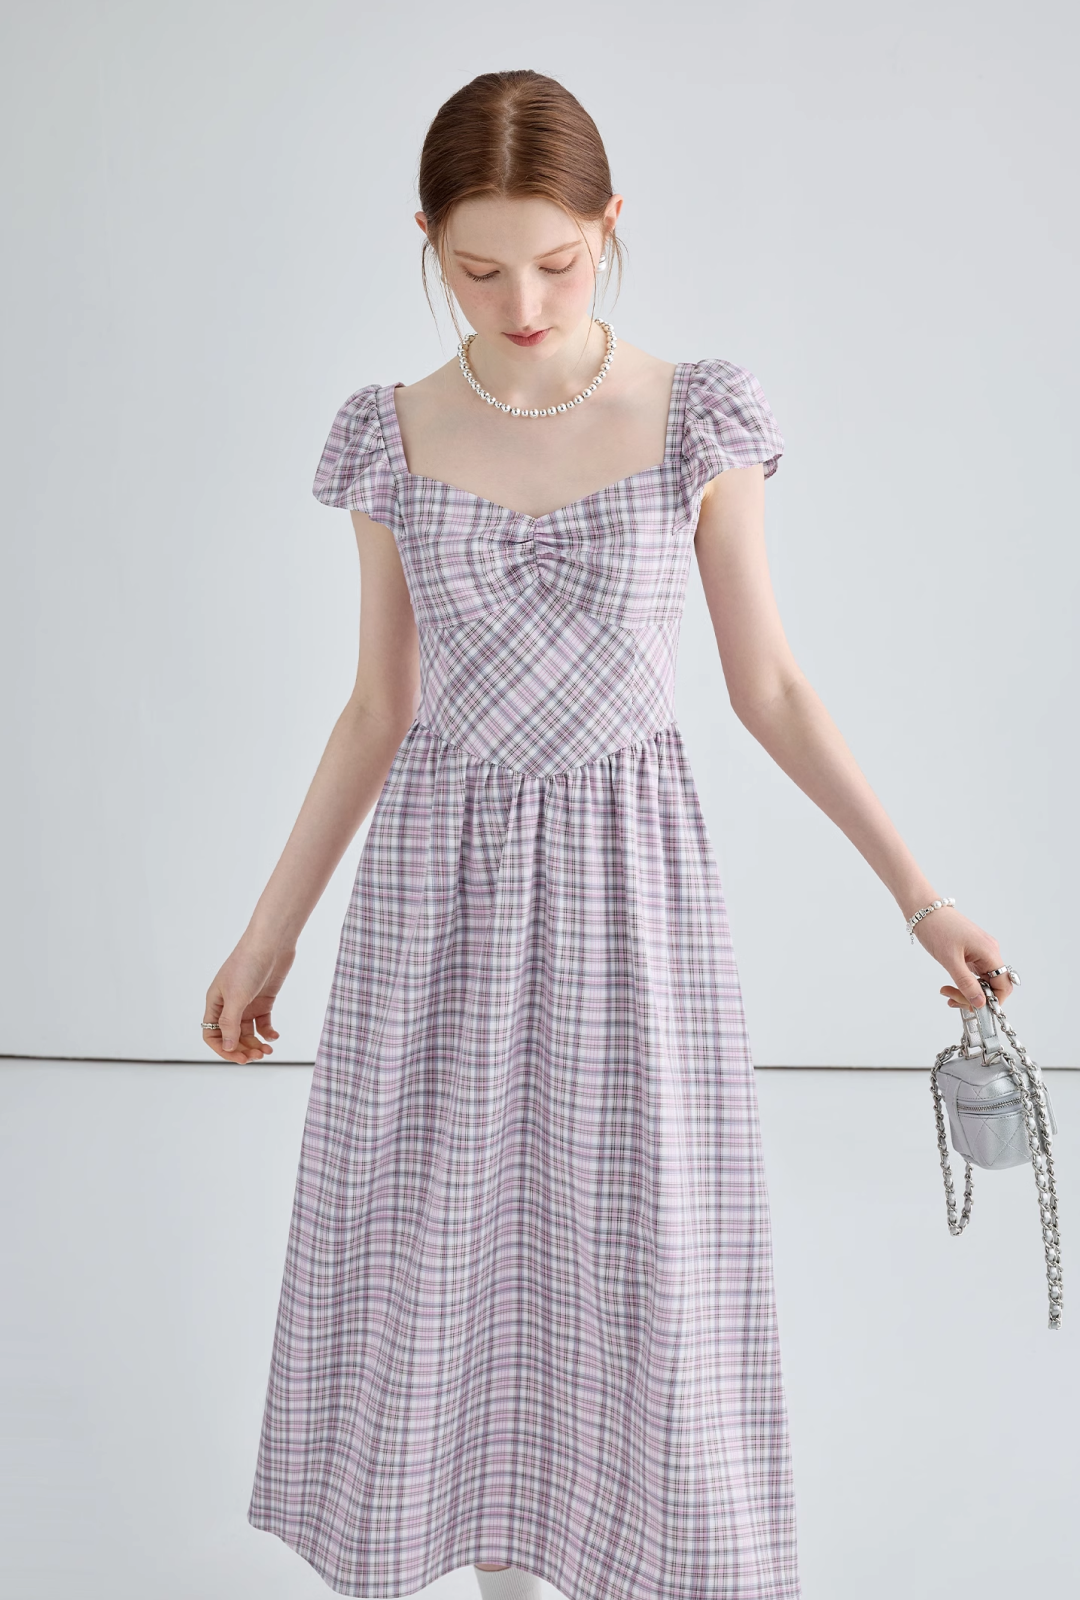 French Sleeve Girly Purple Dress - chiclara